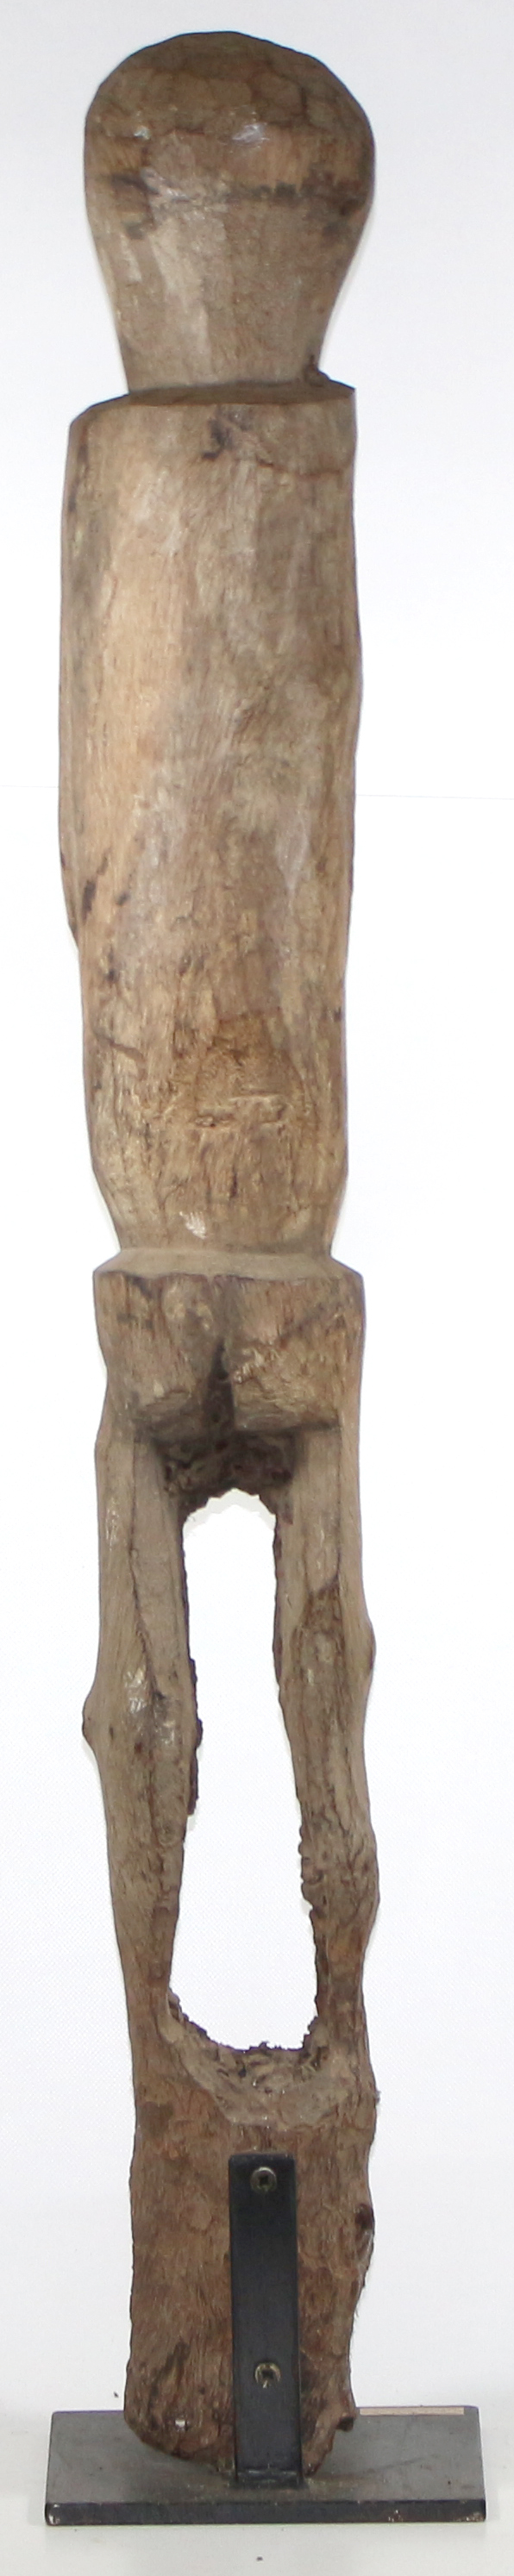 Lamba Togo Pfostenfigur | Bild Nr.3